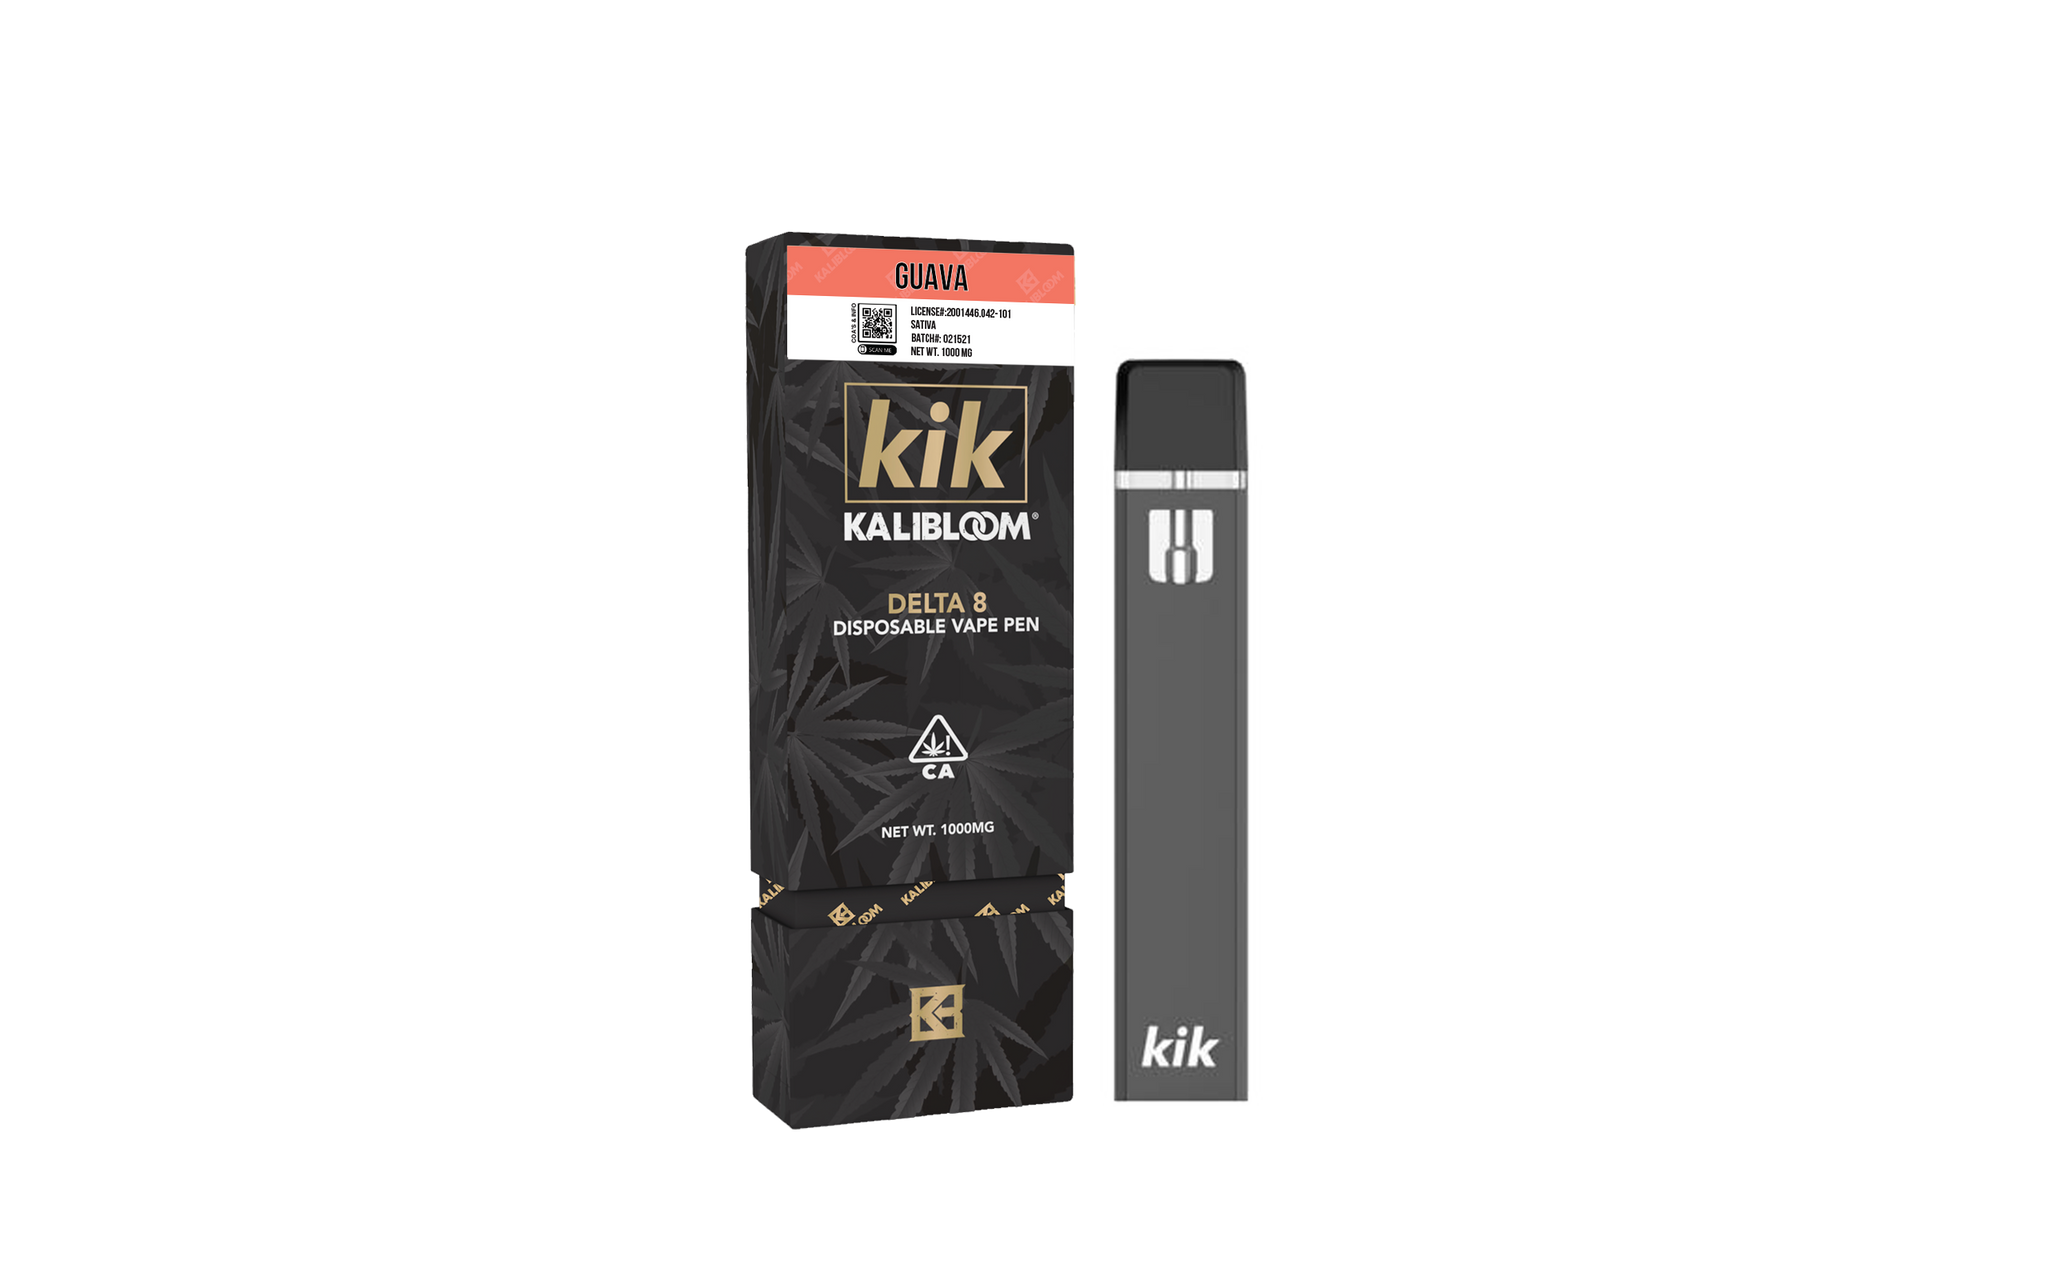 Kalibloom Kik Delta 8 Disposable Vape Device 1000mg